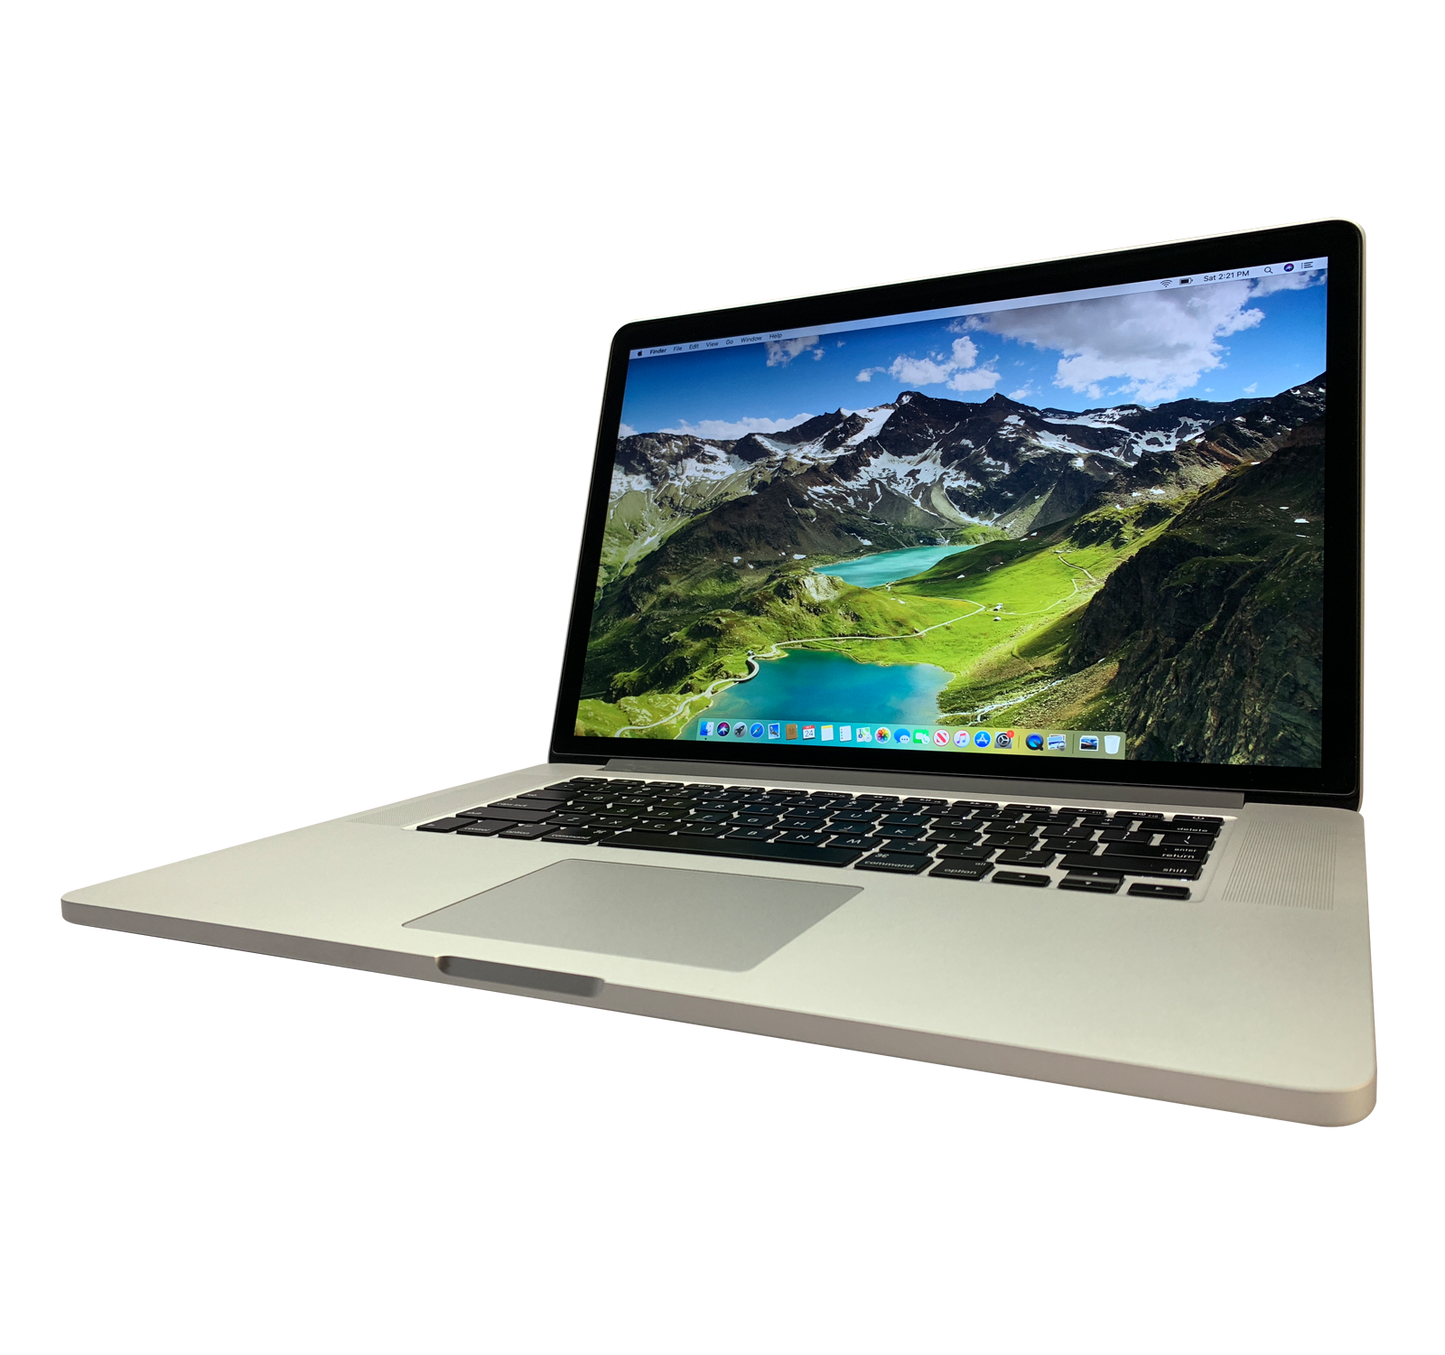 Macbook Air 15 inch" 2.3GHz i7 16GB RAM  512GB SSD - MacOS Catalina